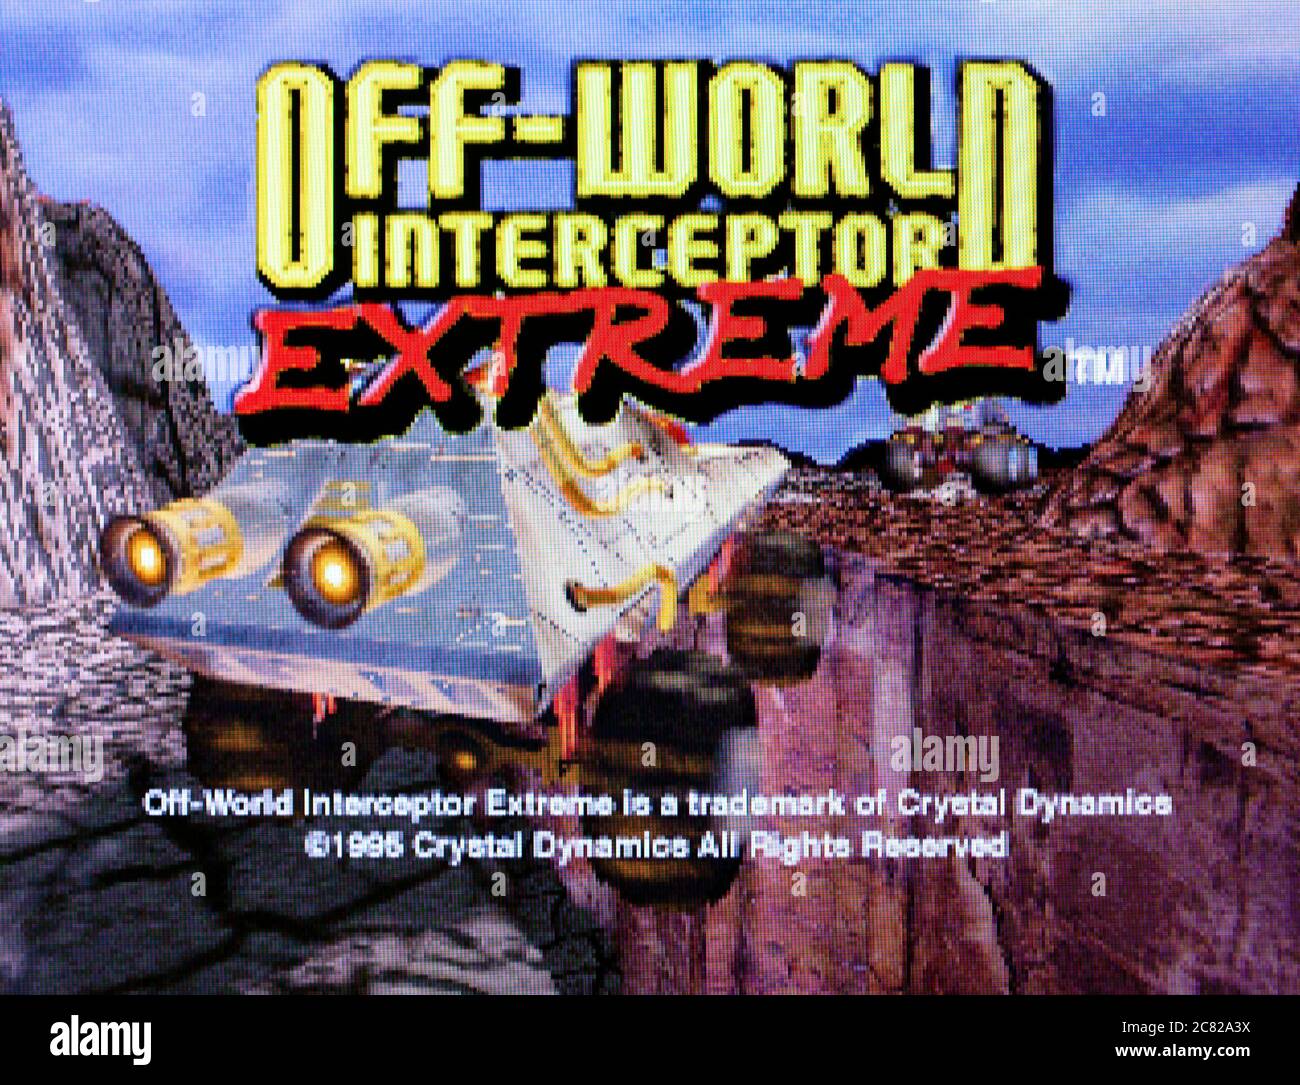 Off-World Interceptor Extreme - Sega Saturn Videogame - Editorial use only Stock Photo